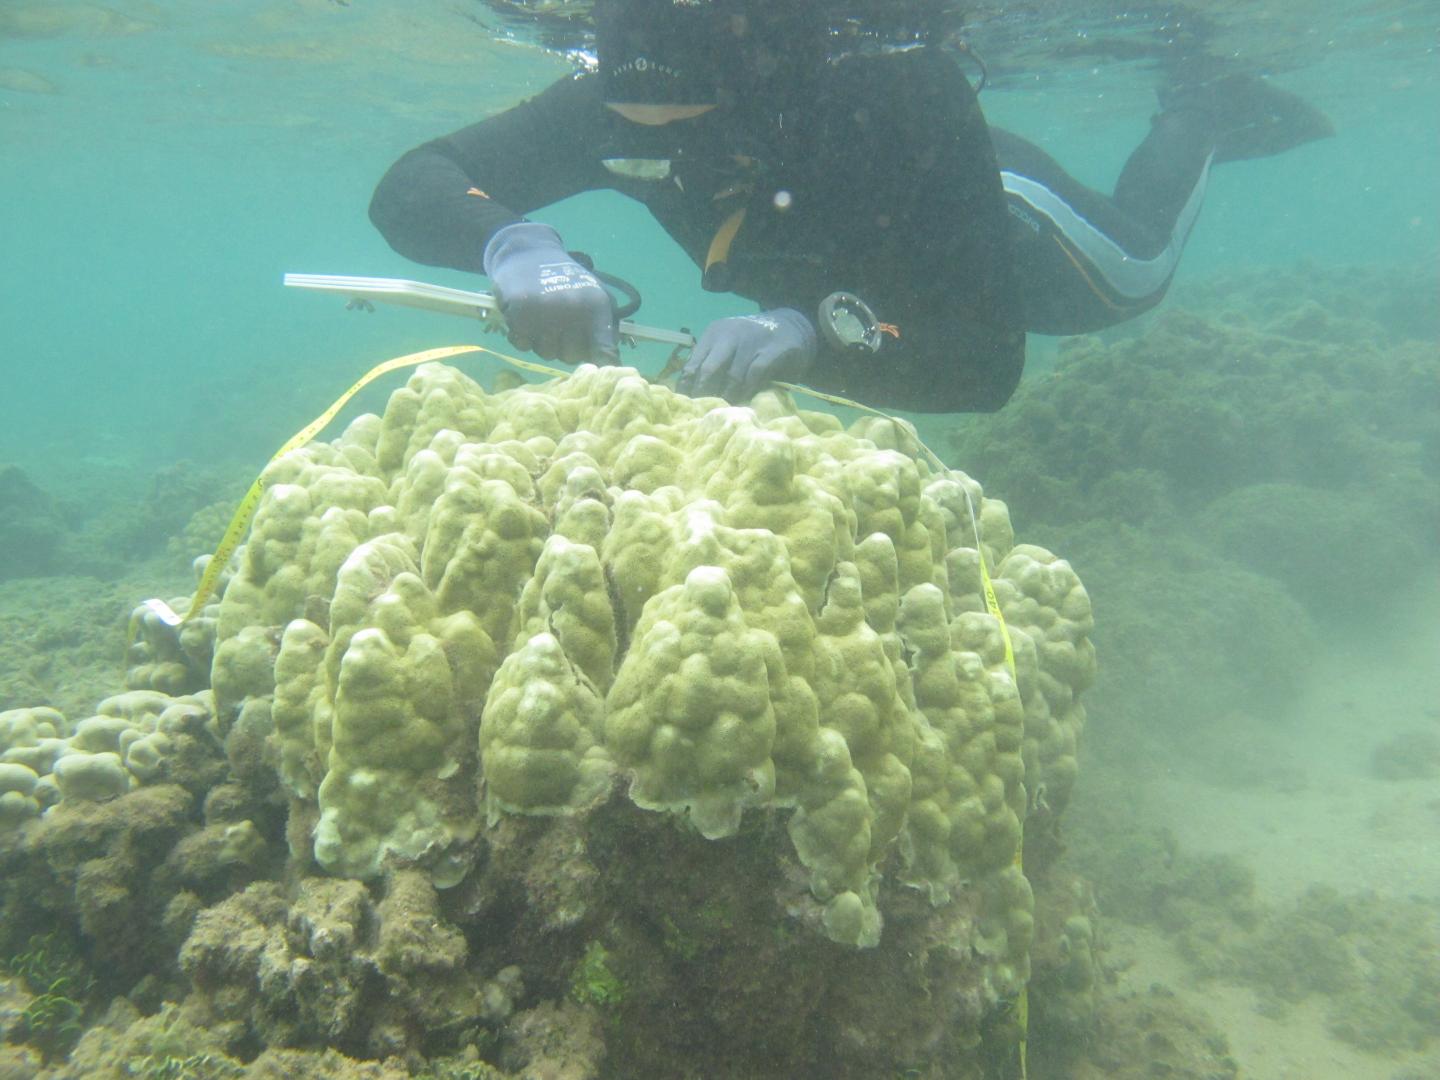 Surveying Gealthy Coral